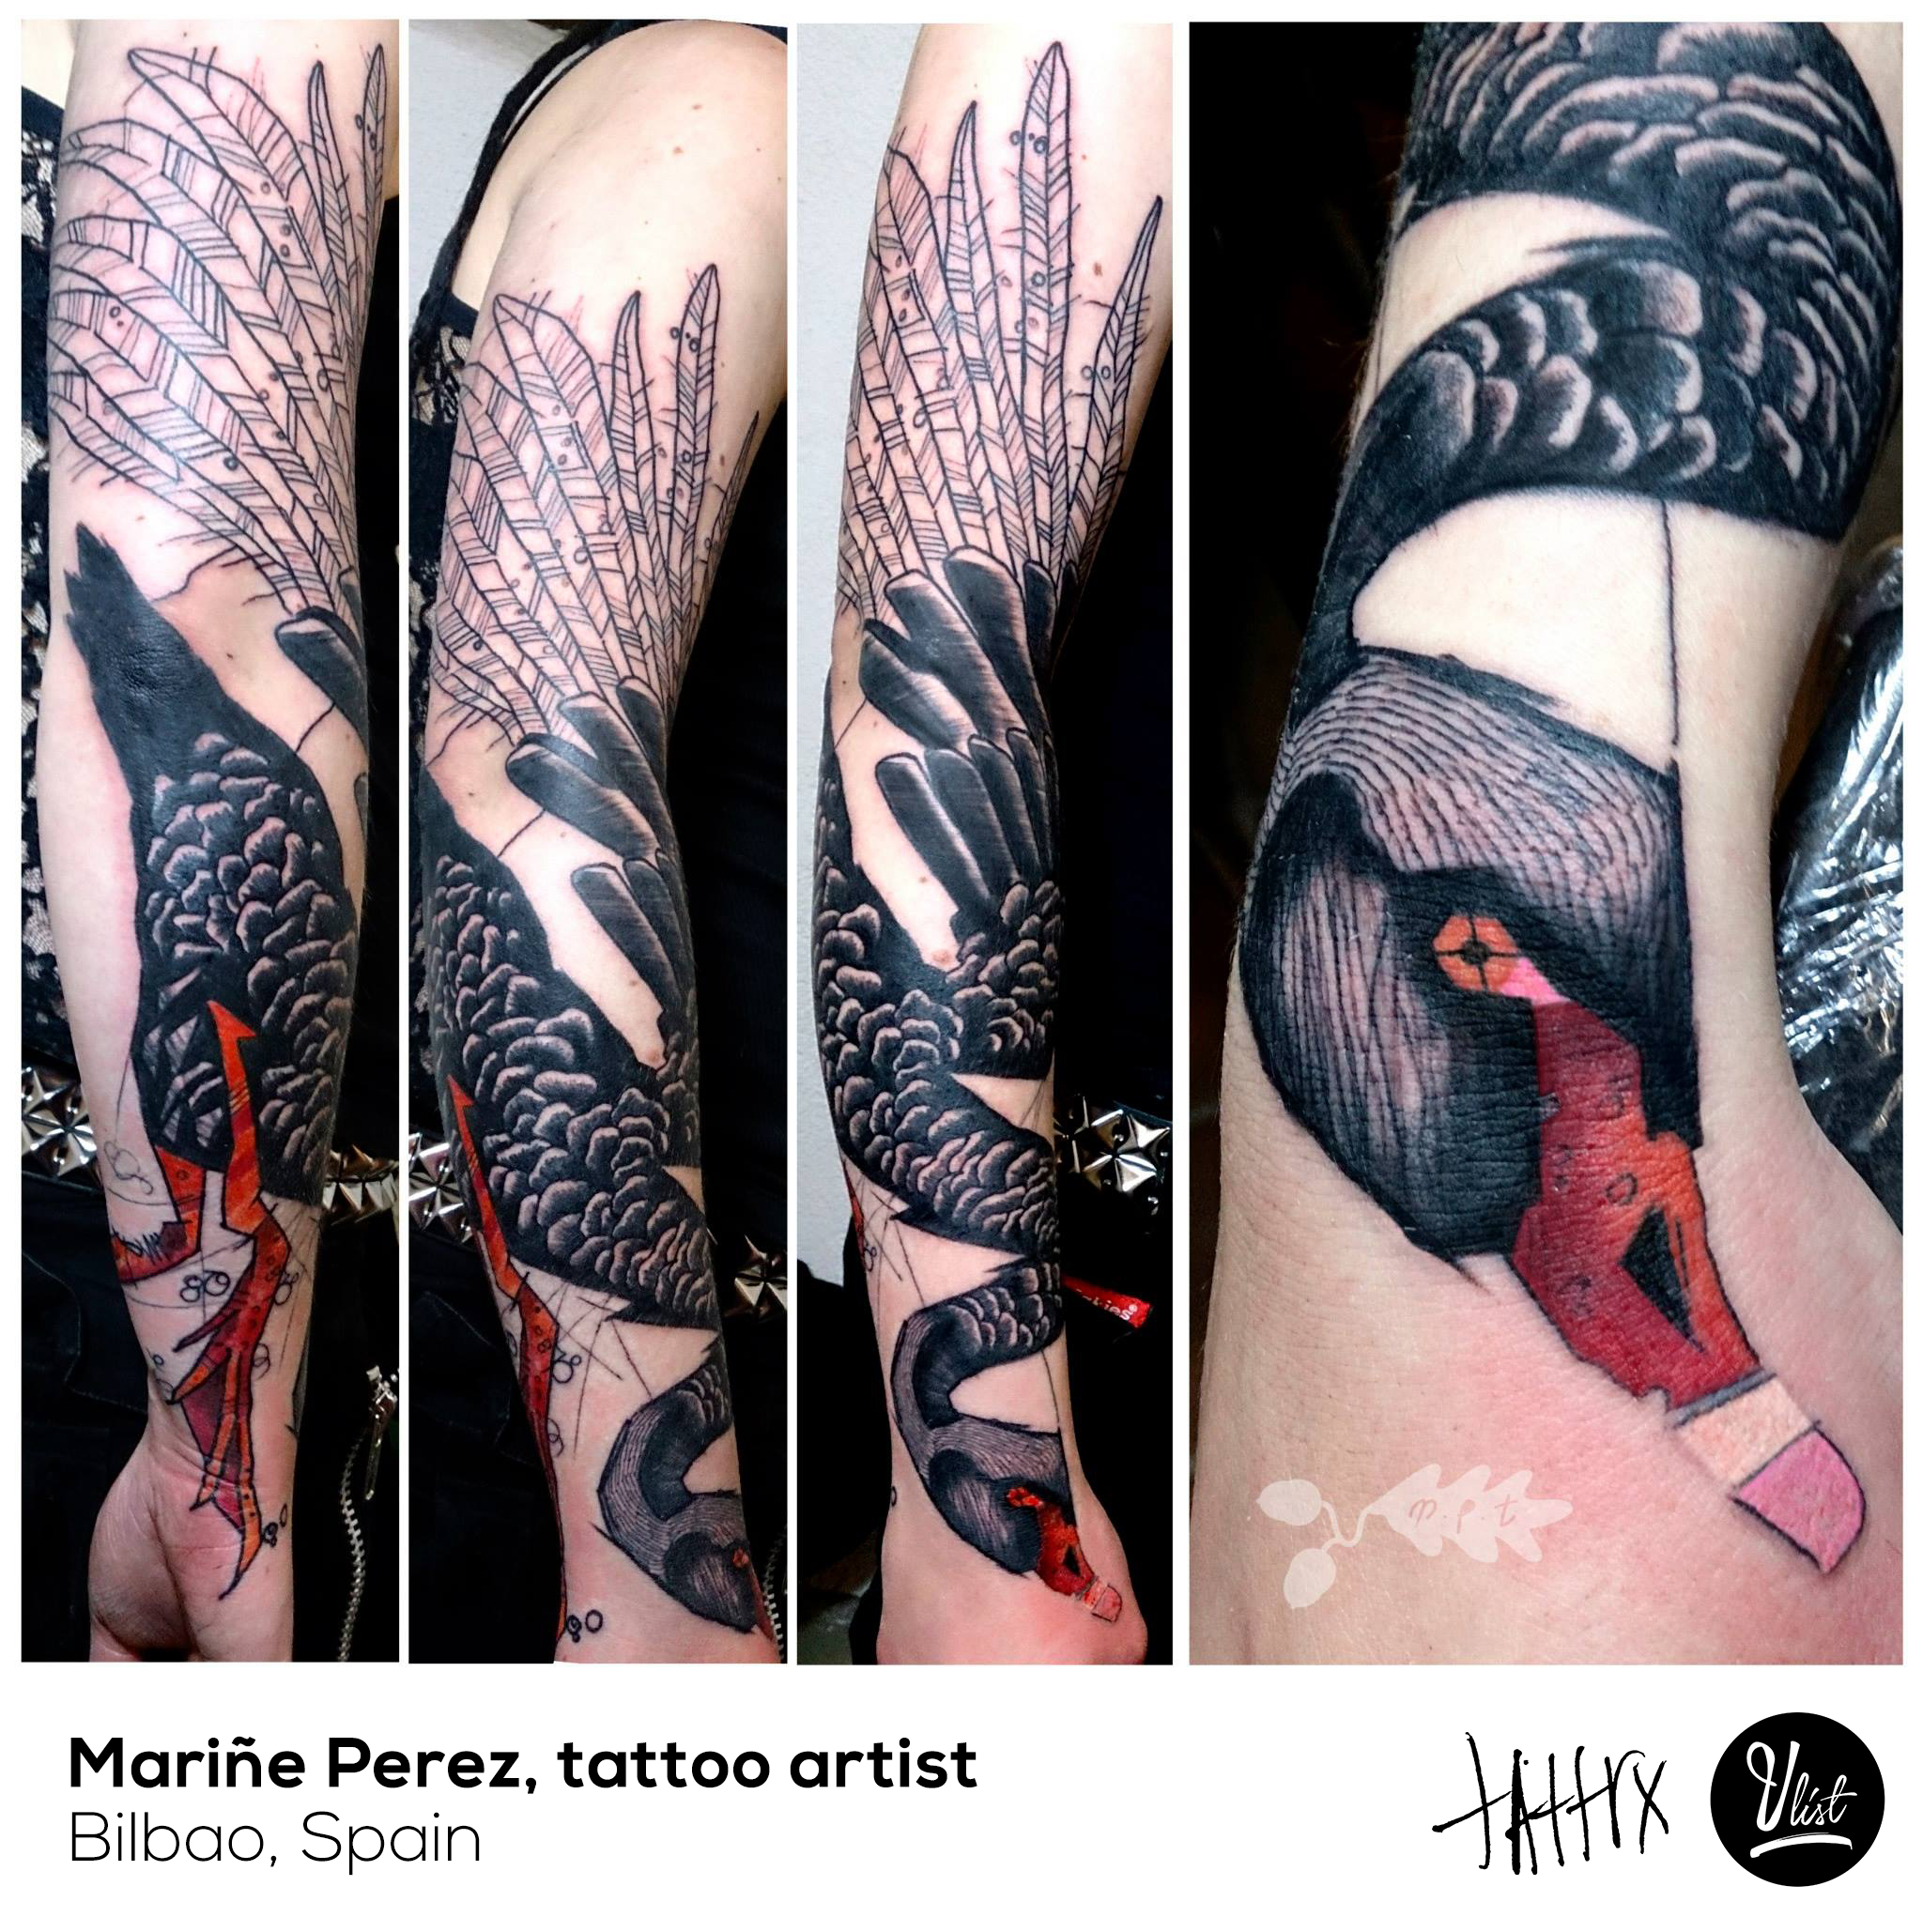 Mariñe-Perez-tattoo-artist-the-vandallist-7